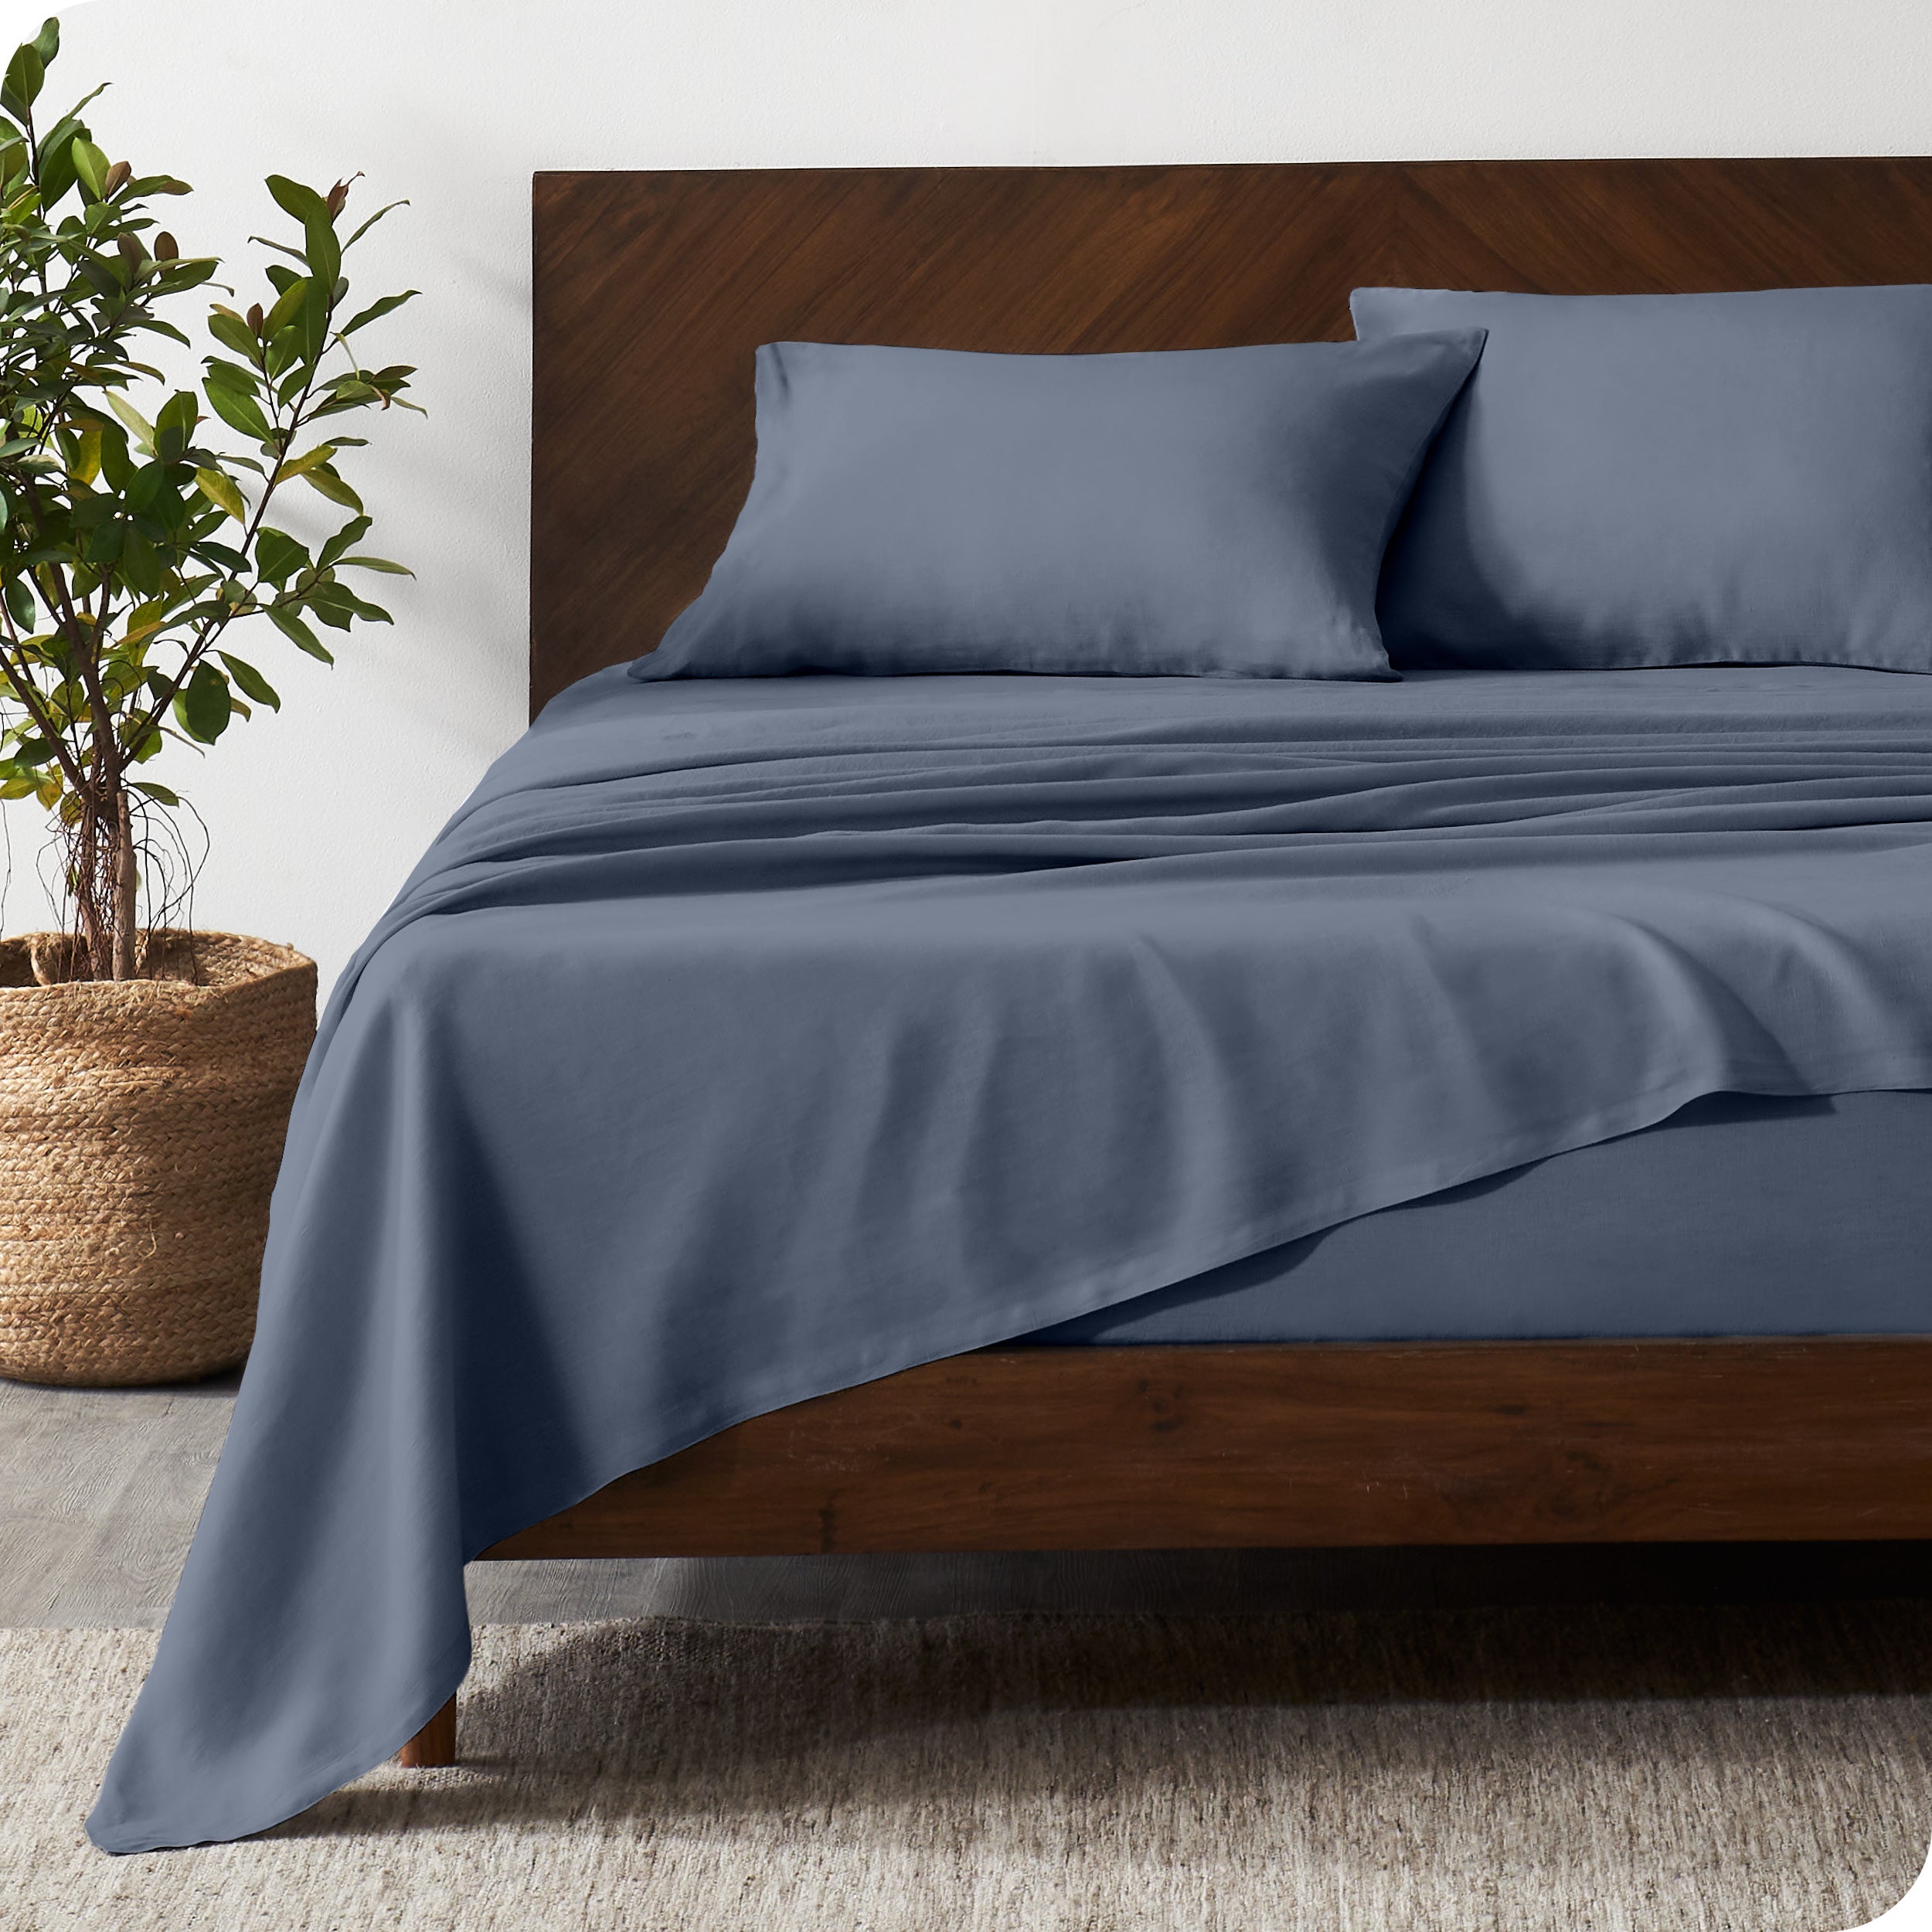 Dark wooden bed frame with indigo linen sheets on the mattress